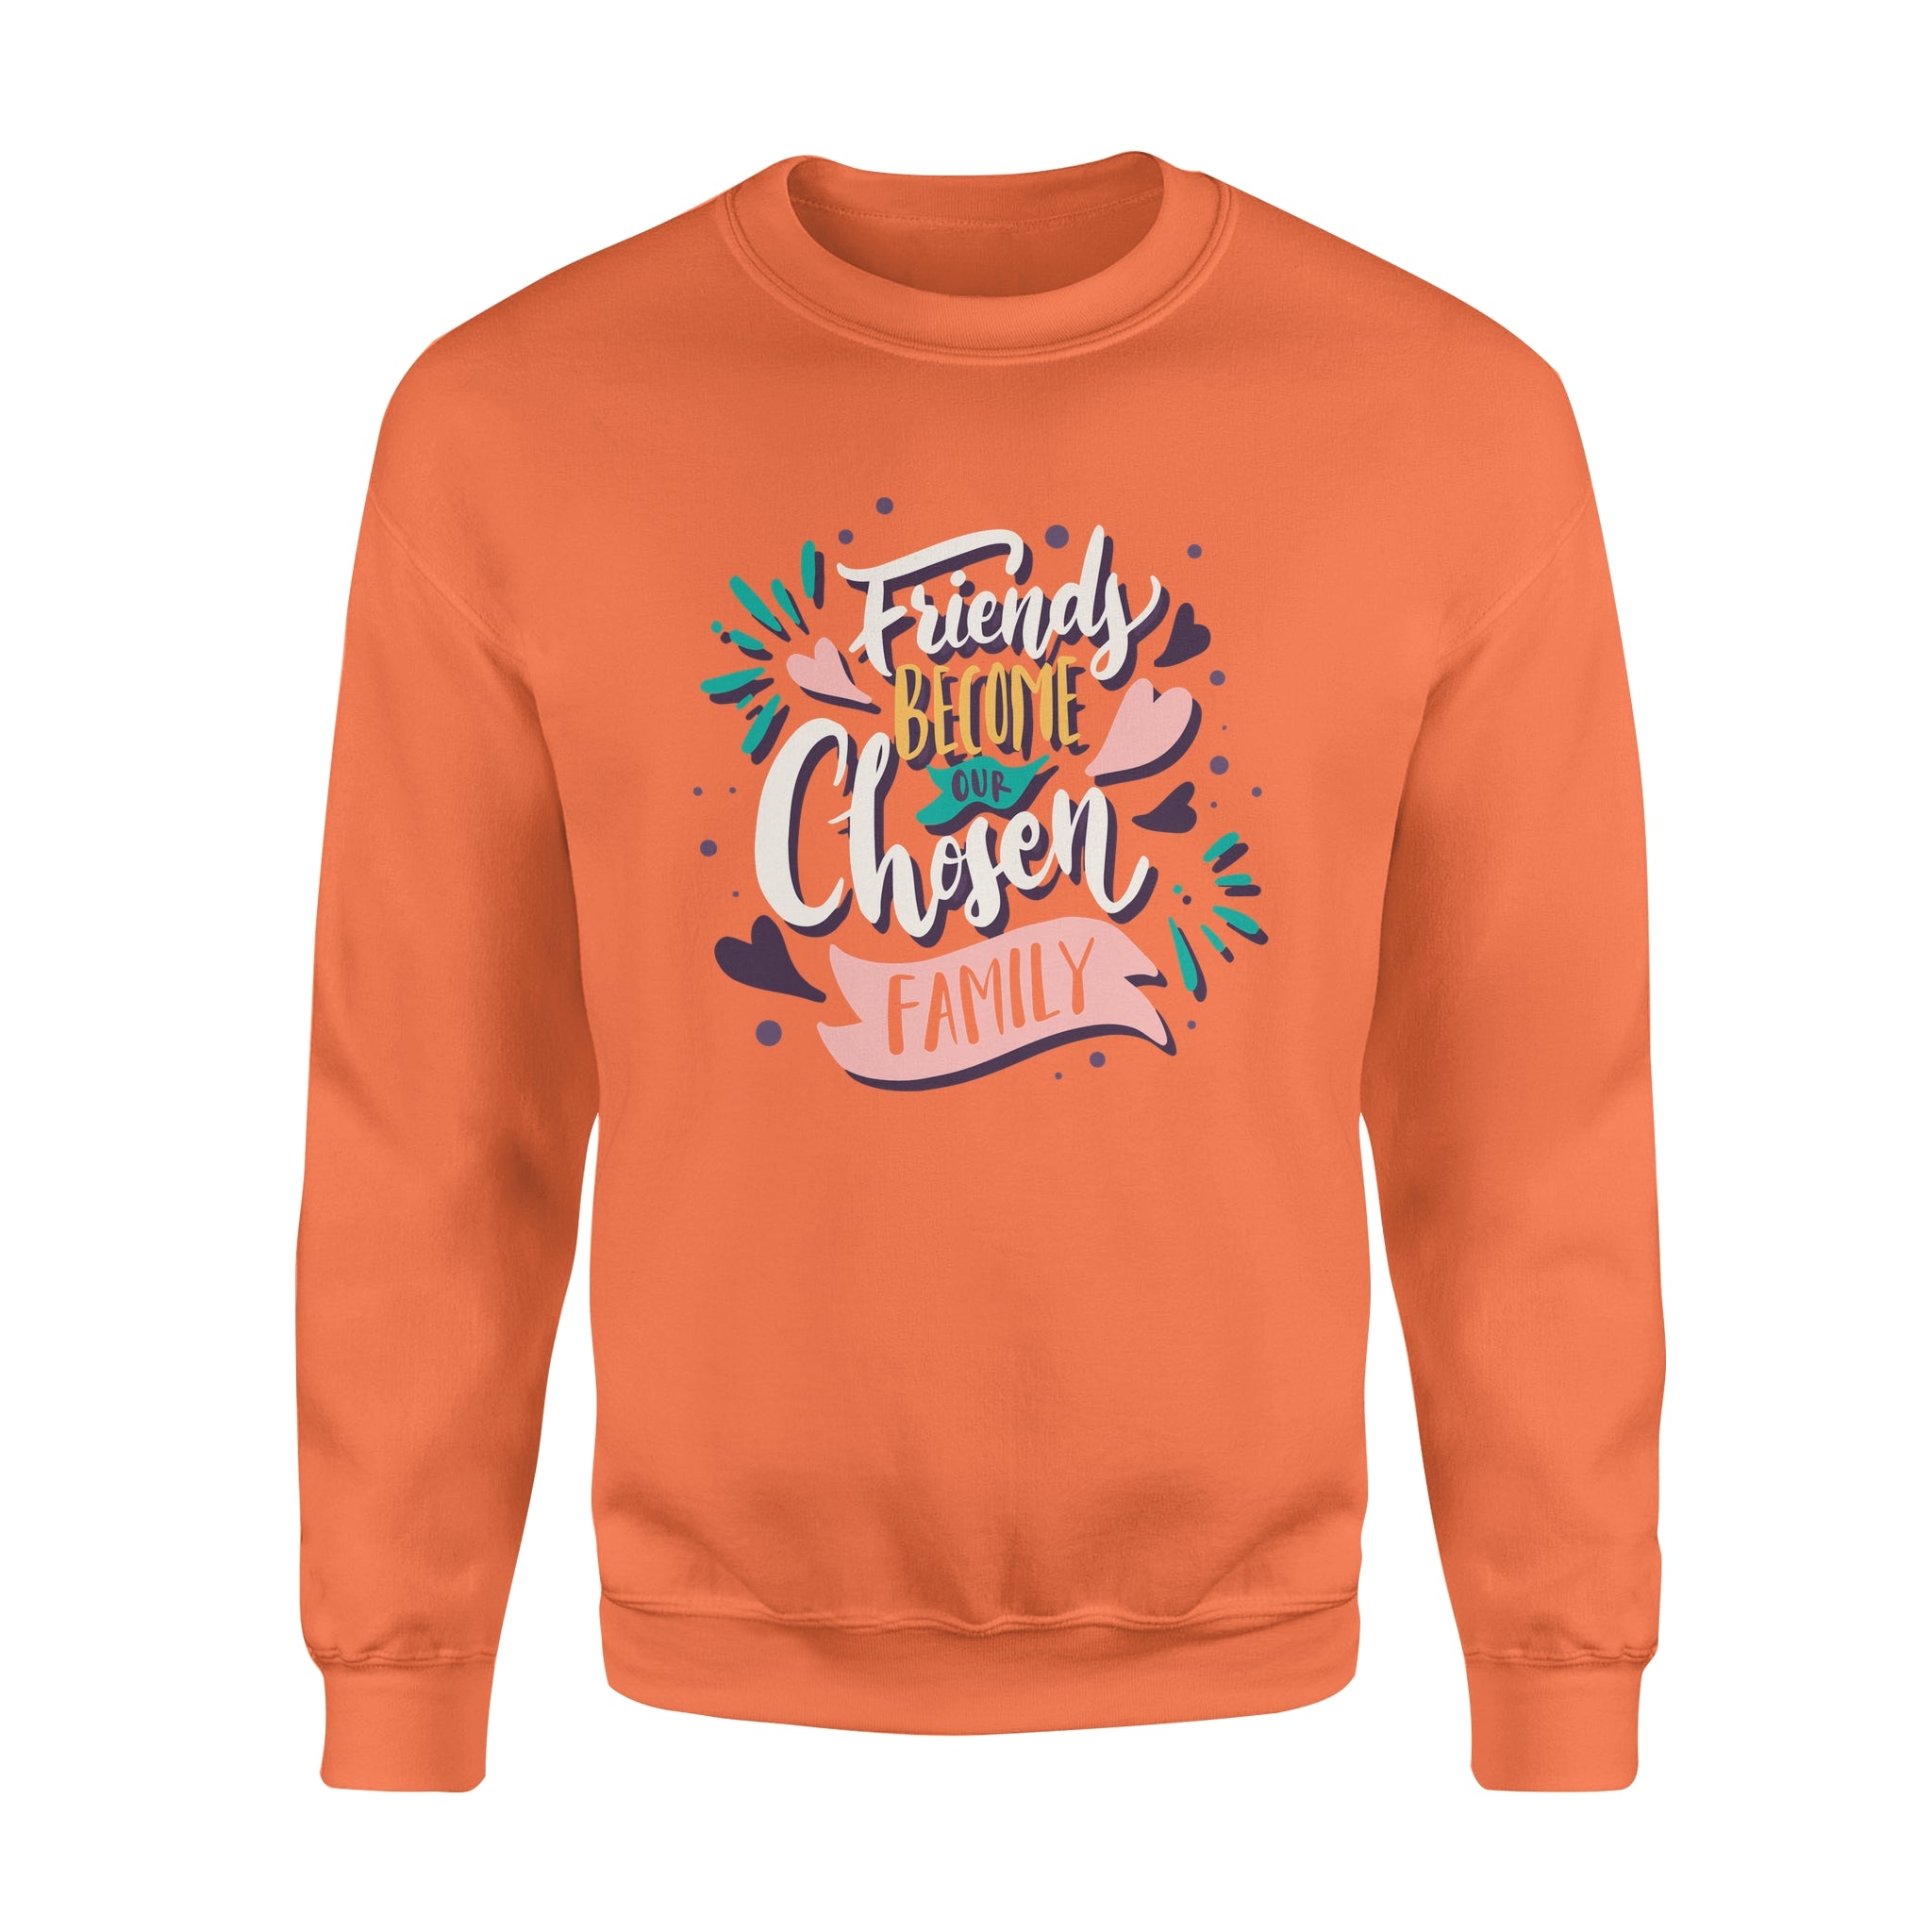 Friend Become Our Chosen Family - Fleece Sweatshirt